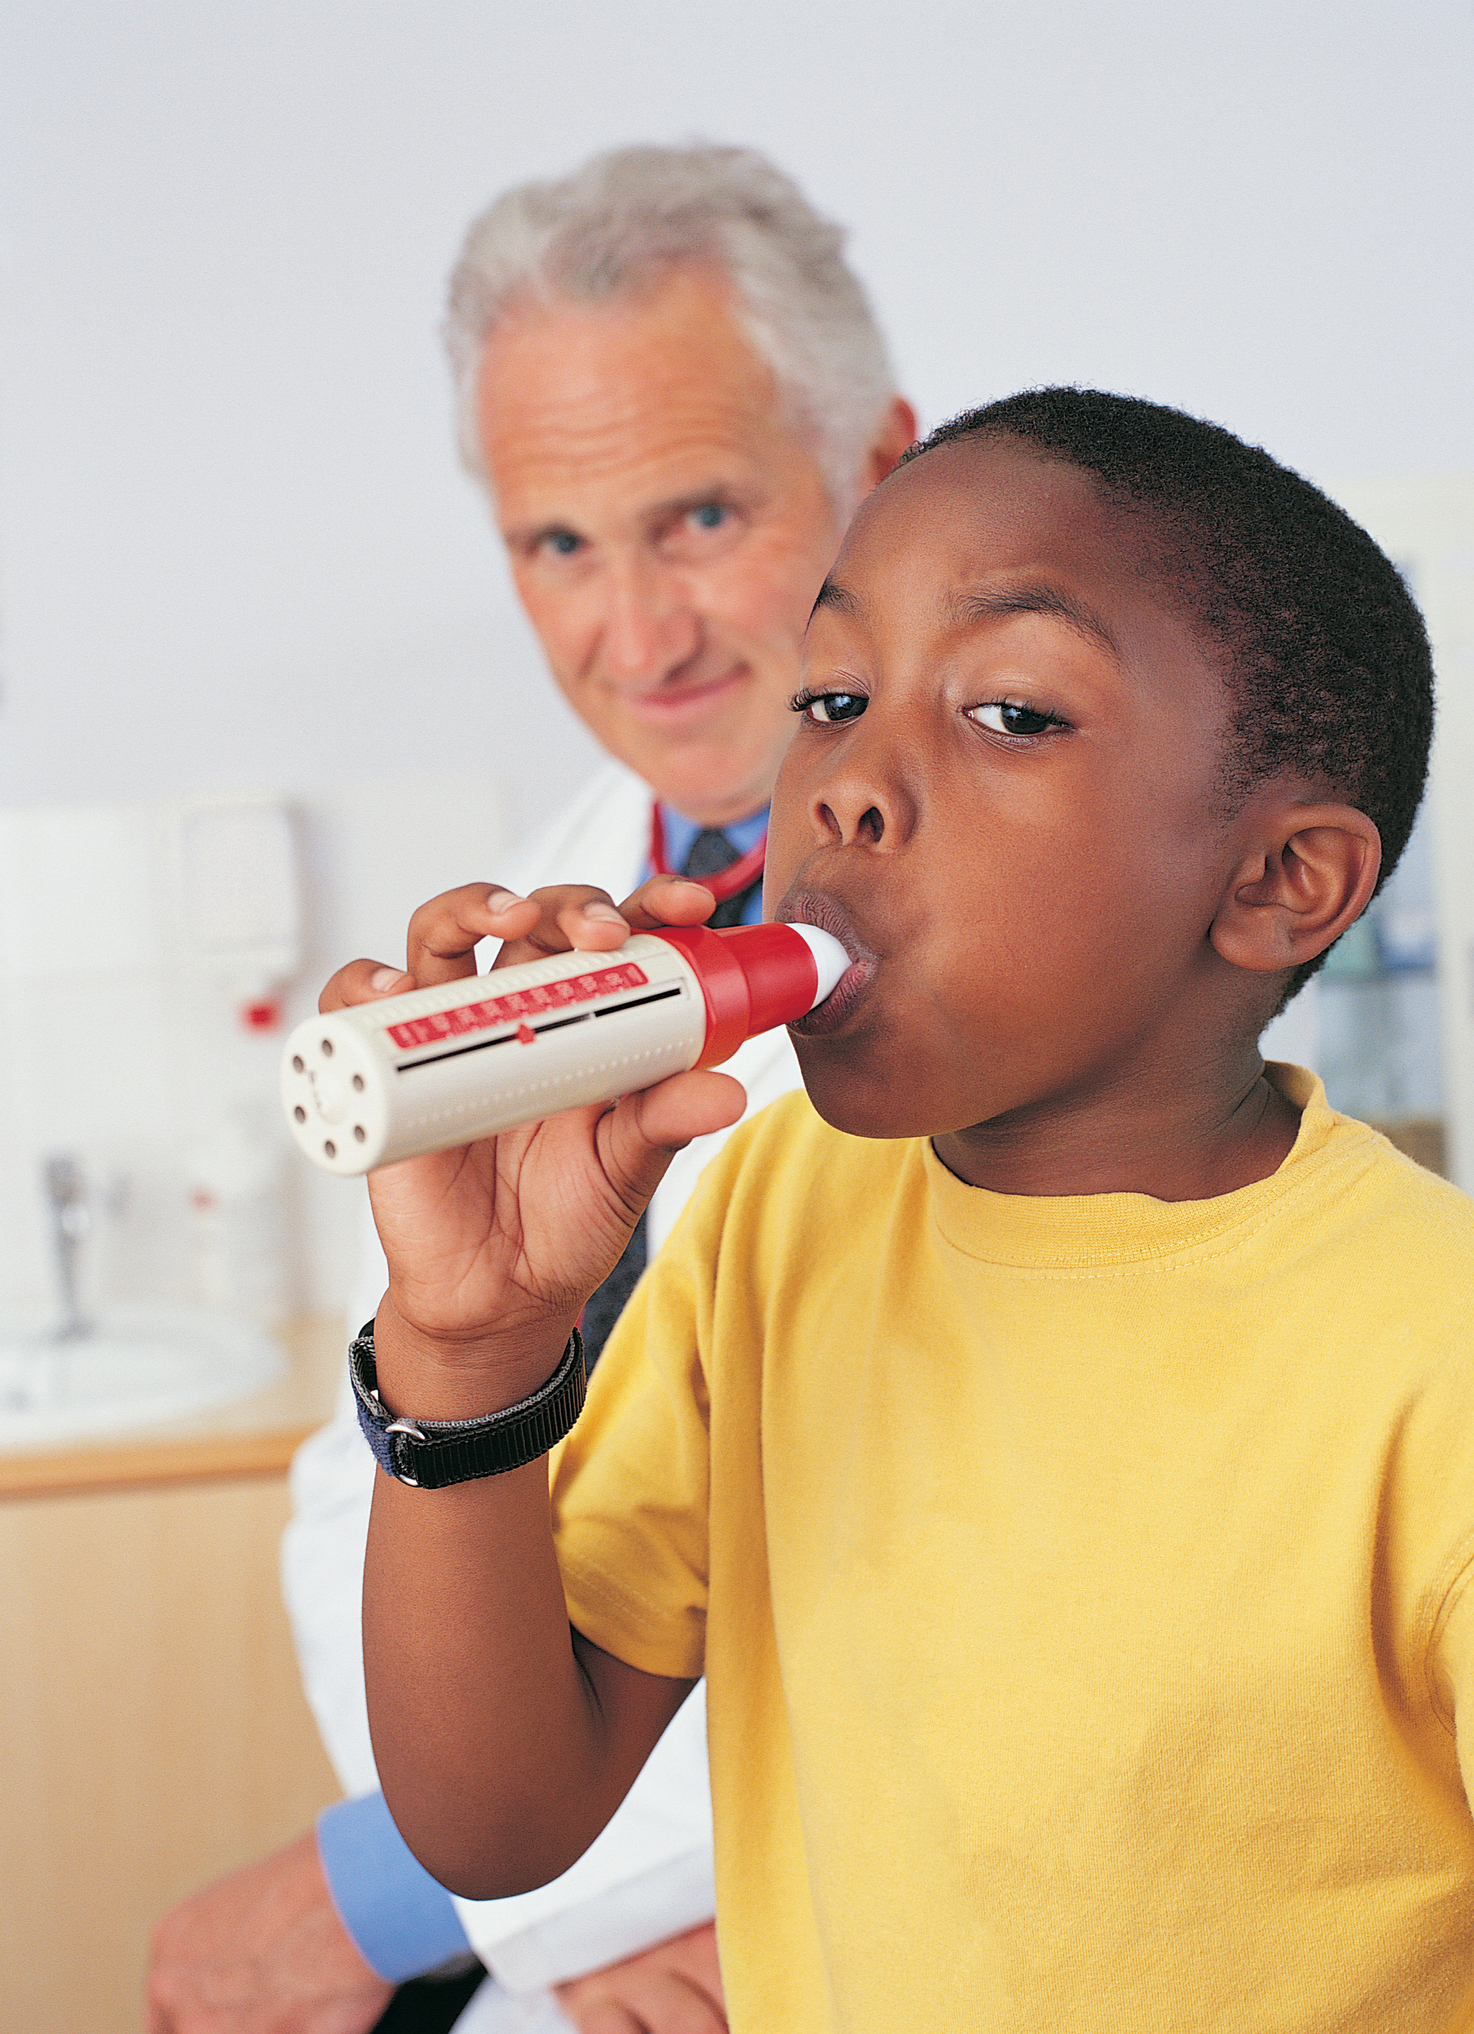 Boy breathing into a Spirometer